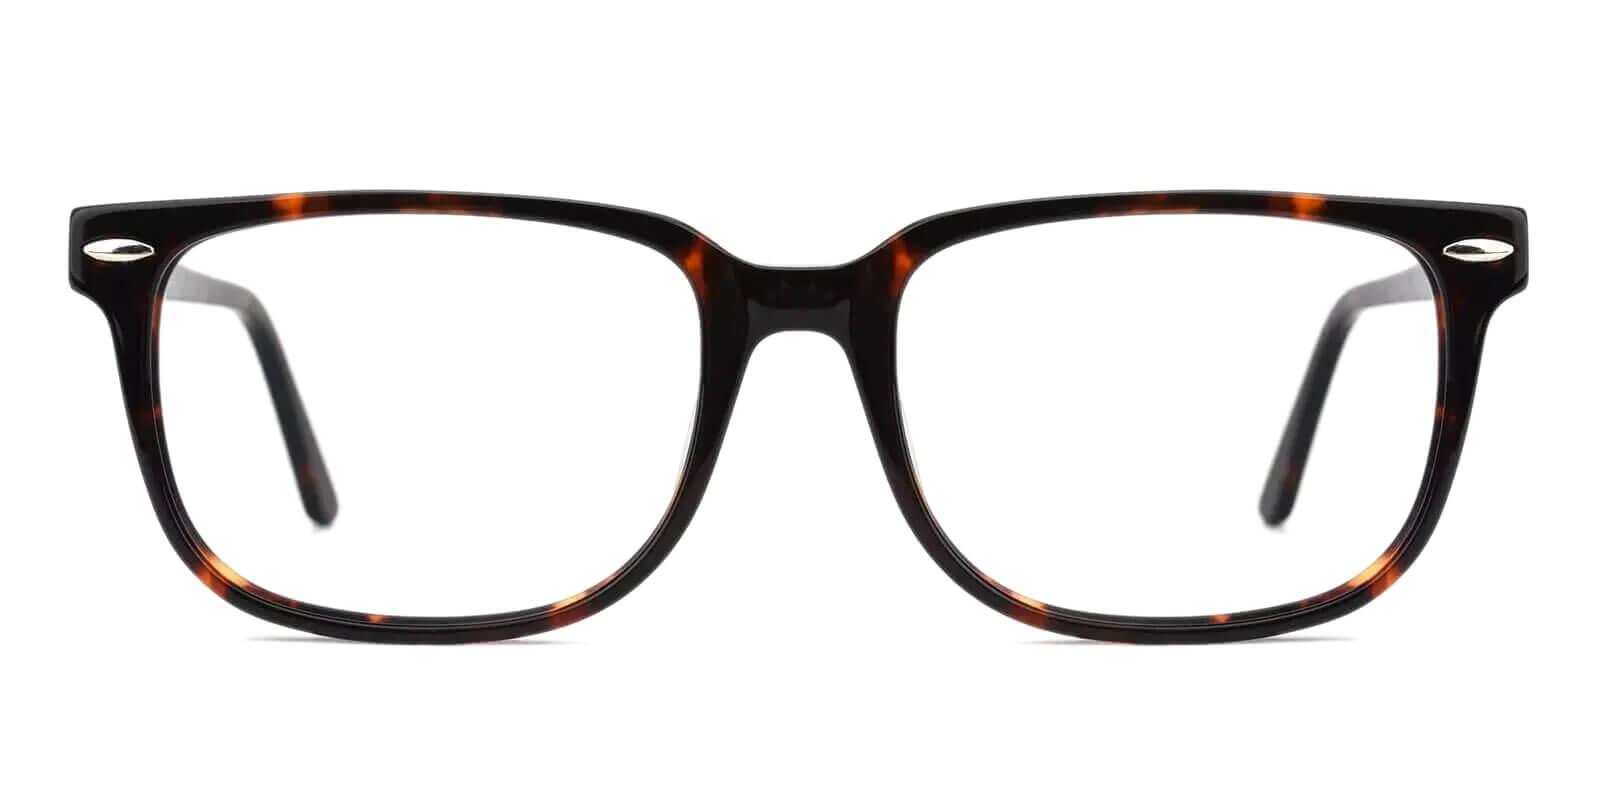 Christy Pattern Acetate Eyeglasses , SpringHinges , UniversalBridgeFit Frames from ABBE Glasses